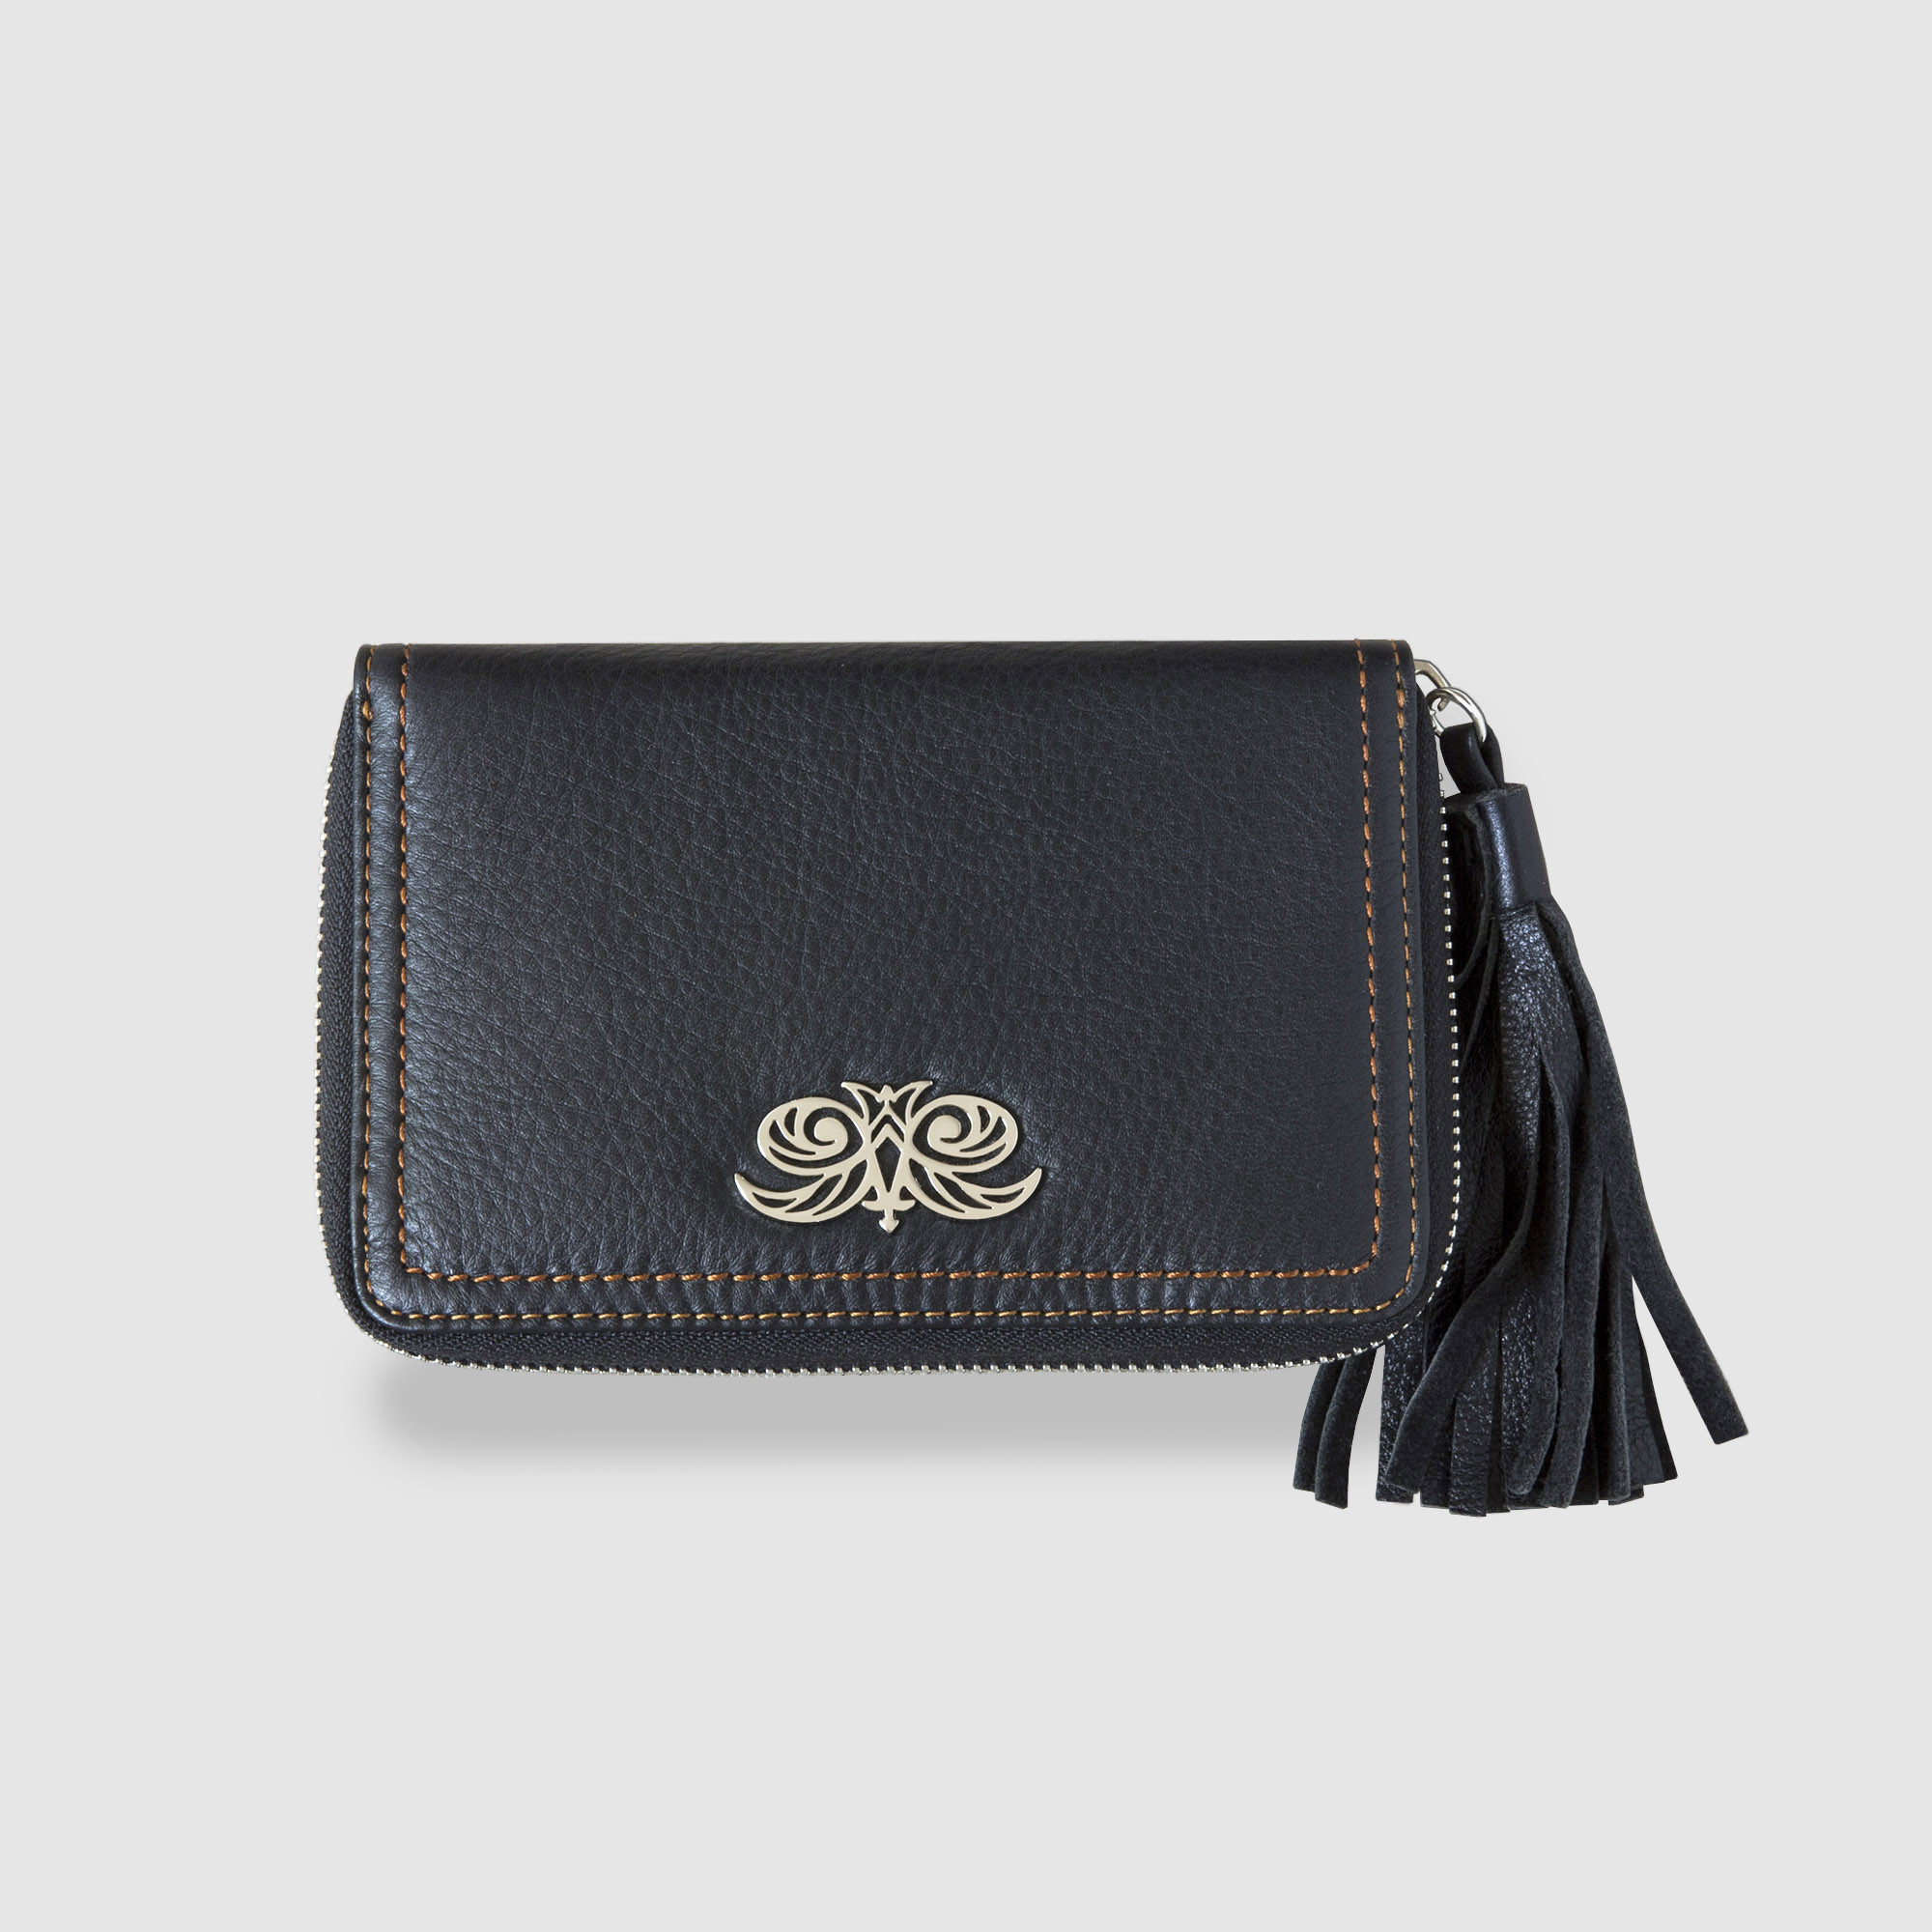 Zip around wallet NEW YORK in black grained calfskin and tassel - front view